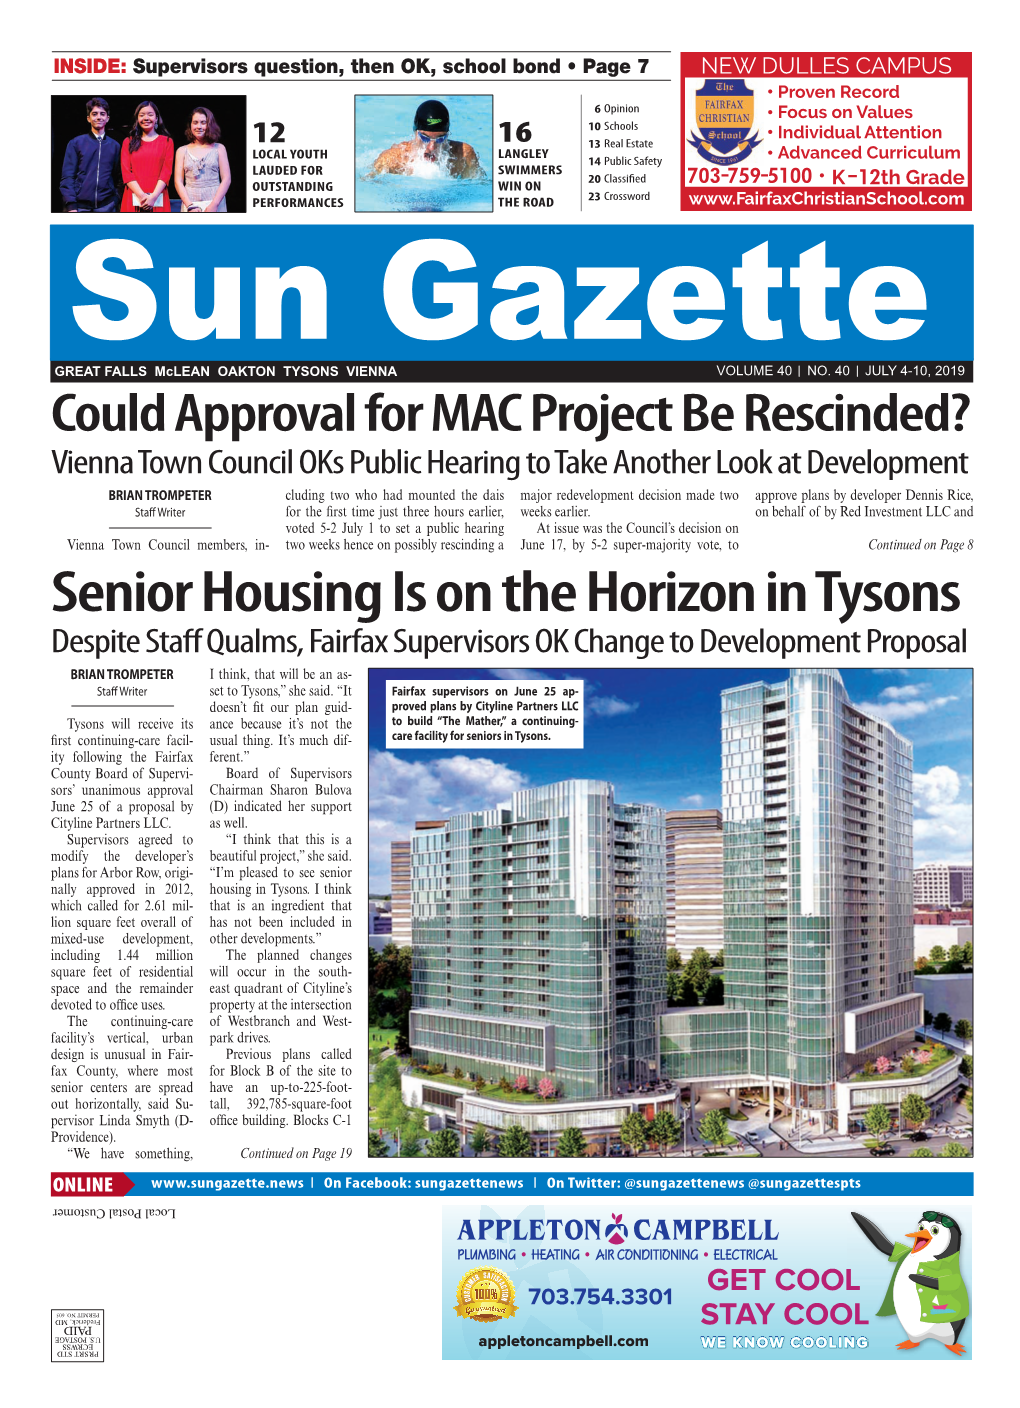 Senior Housing Is on the Horizon in Tysons